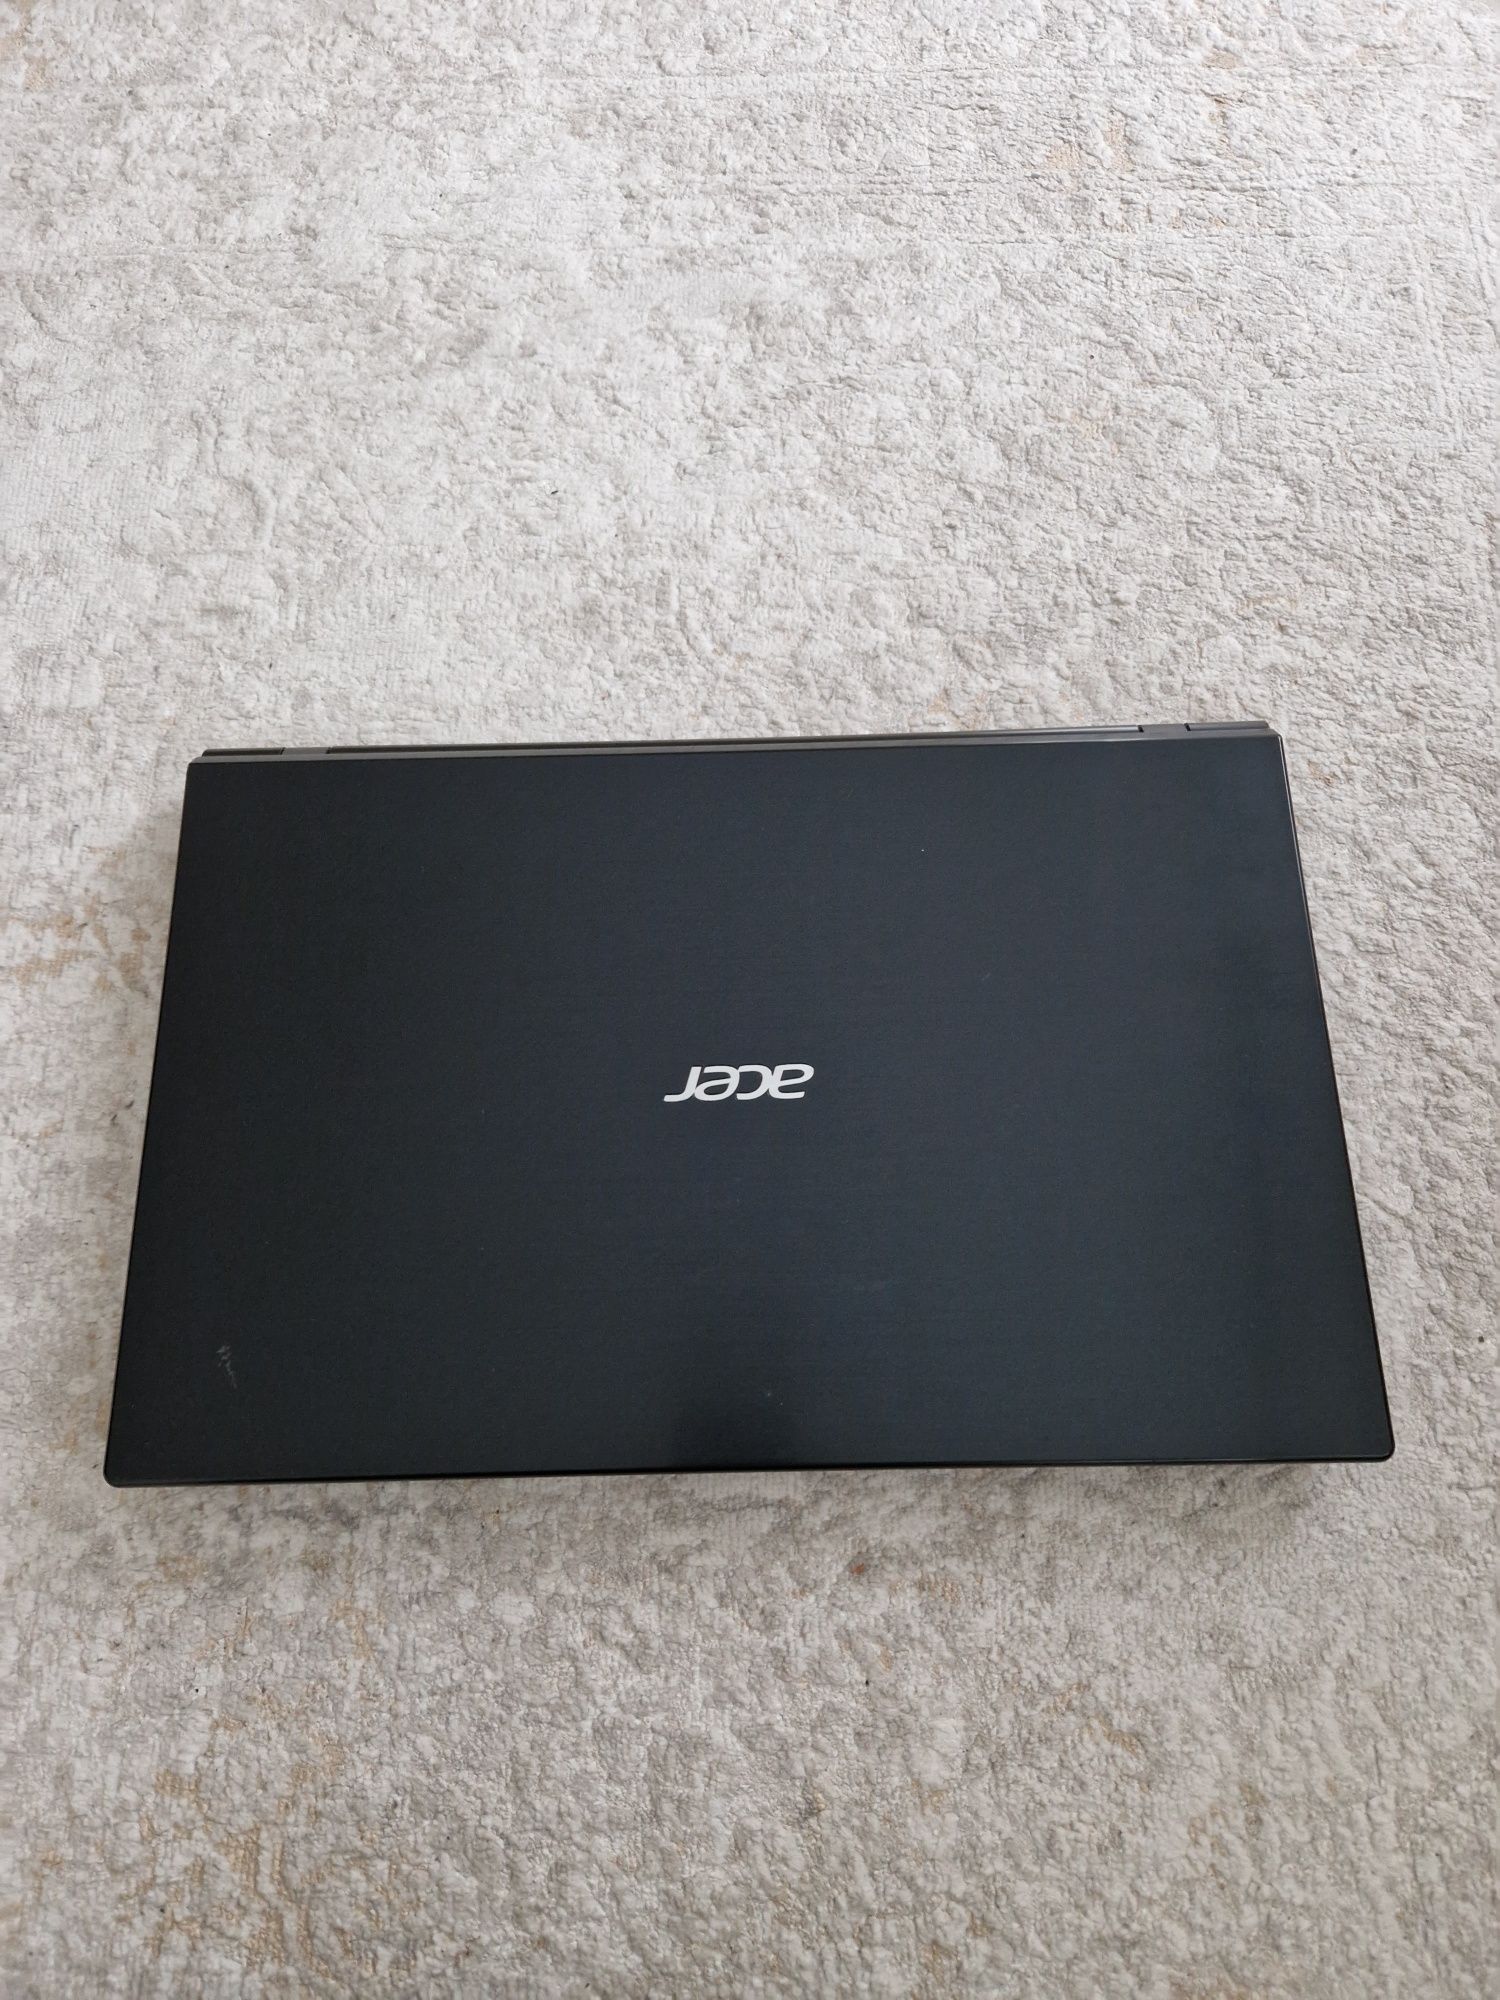 Acer aspire V3-772g core i7 32ram GeForce850m 17 full hd